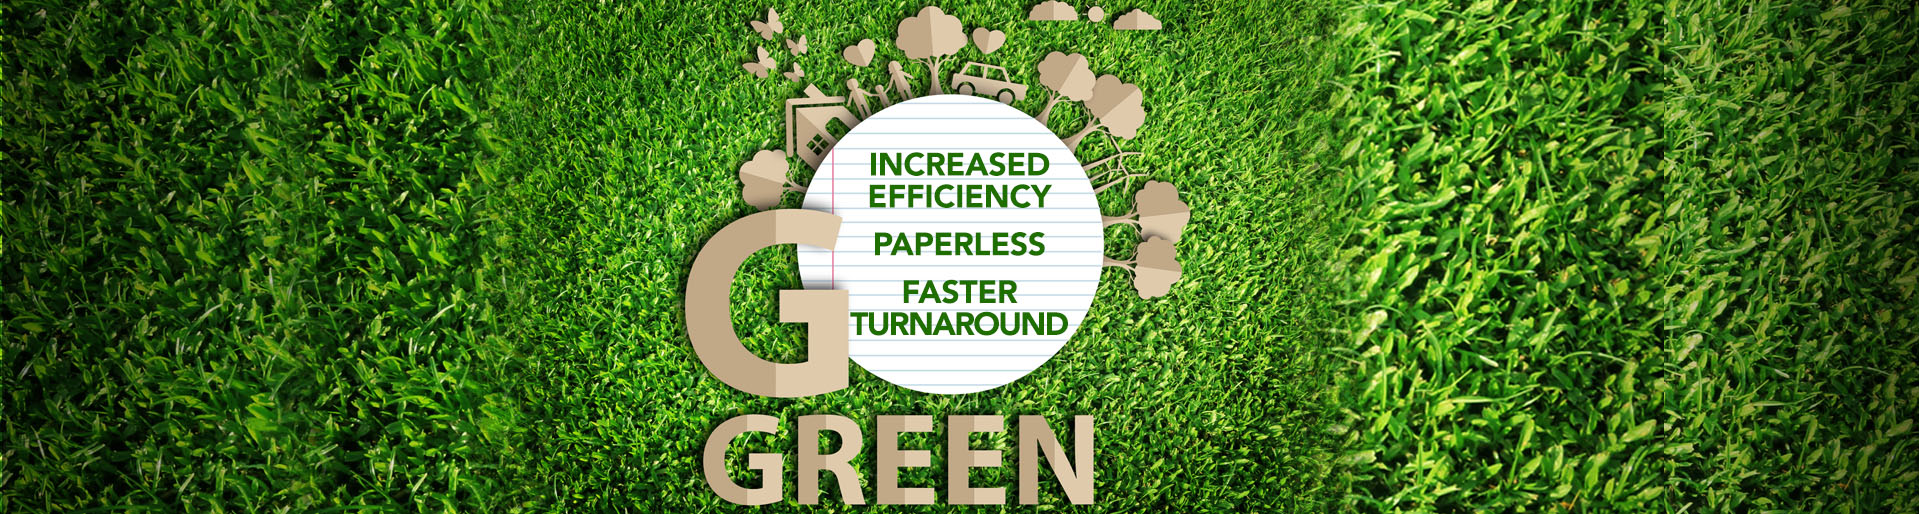 Go Green Increased Efficiency Paperless Faster Turnaround